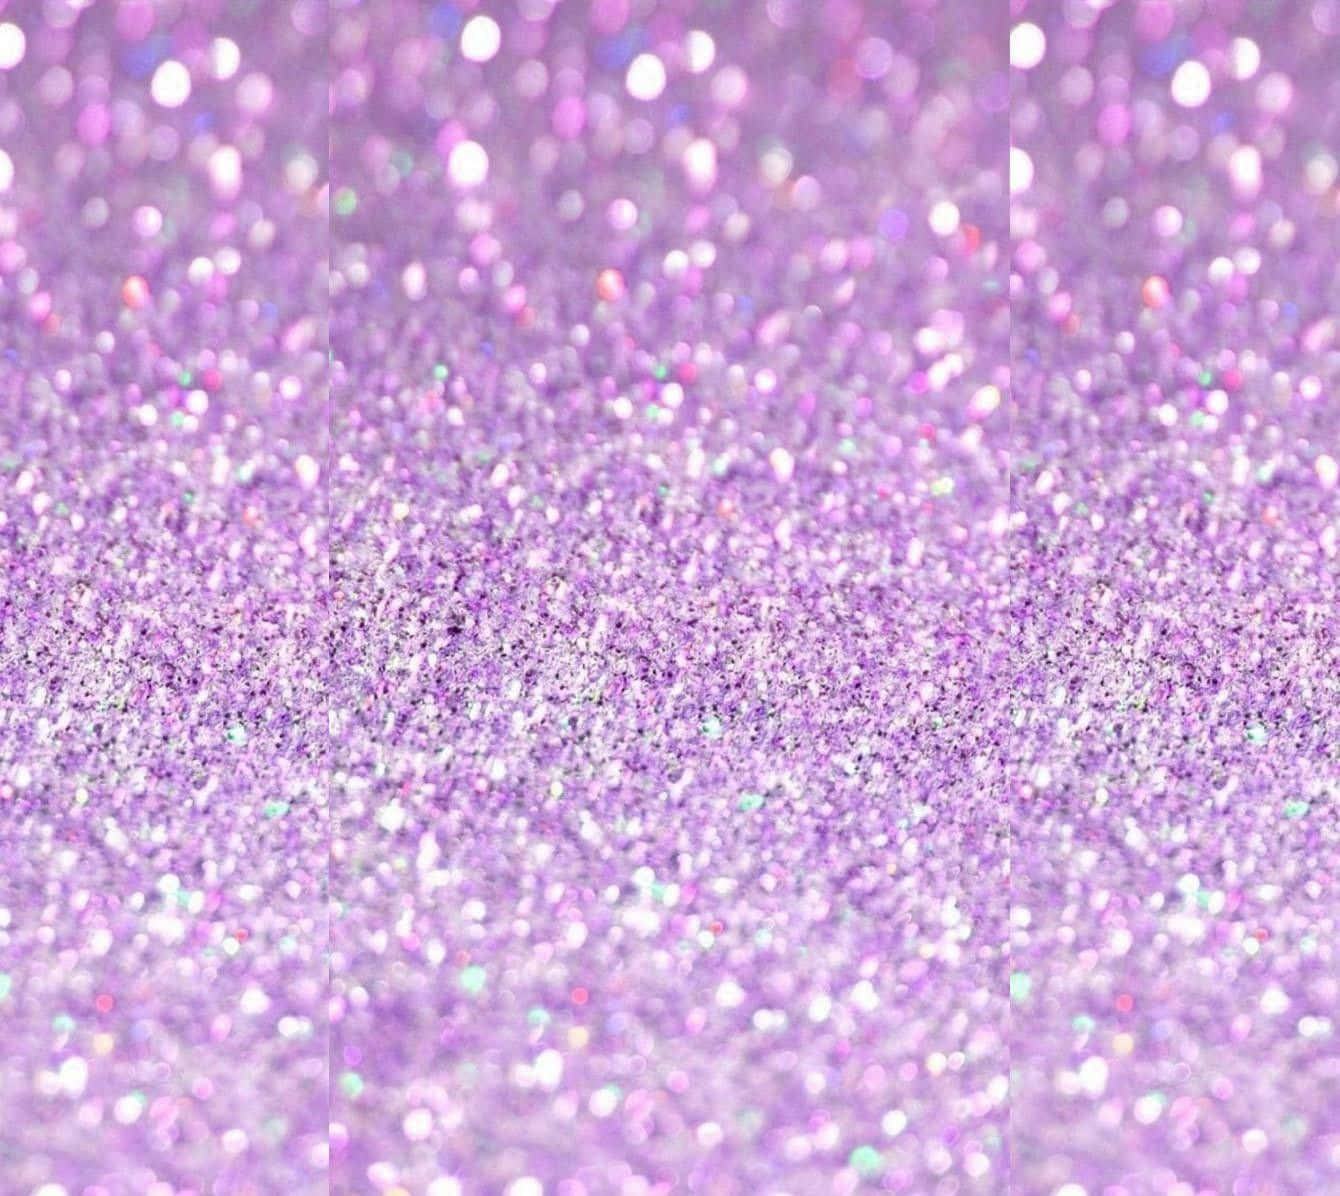 Bright light purple glittering featured on a stunning background